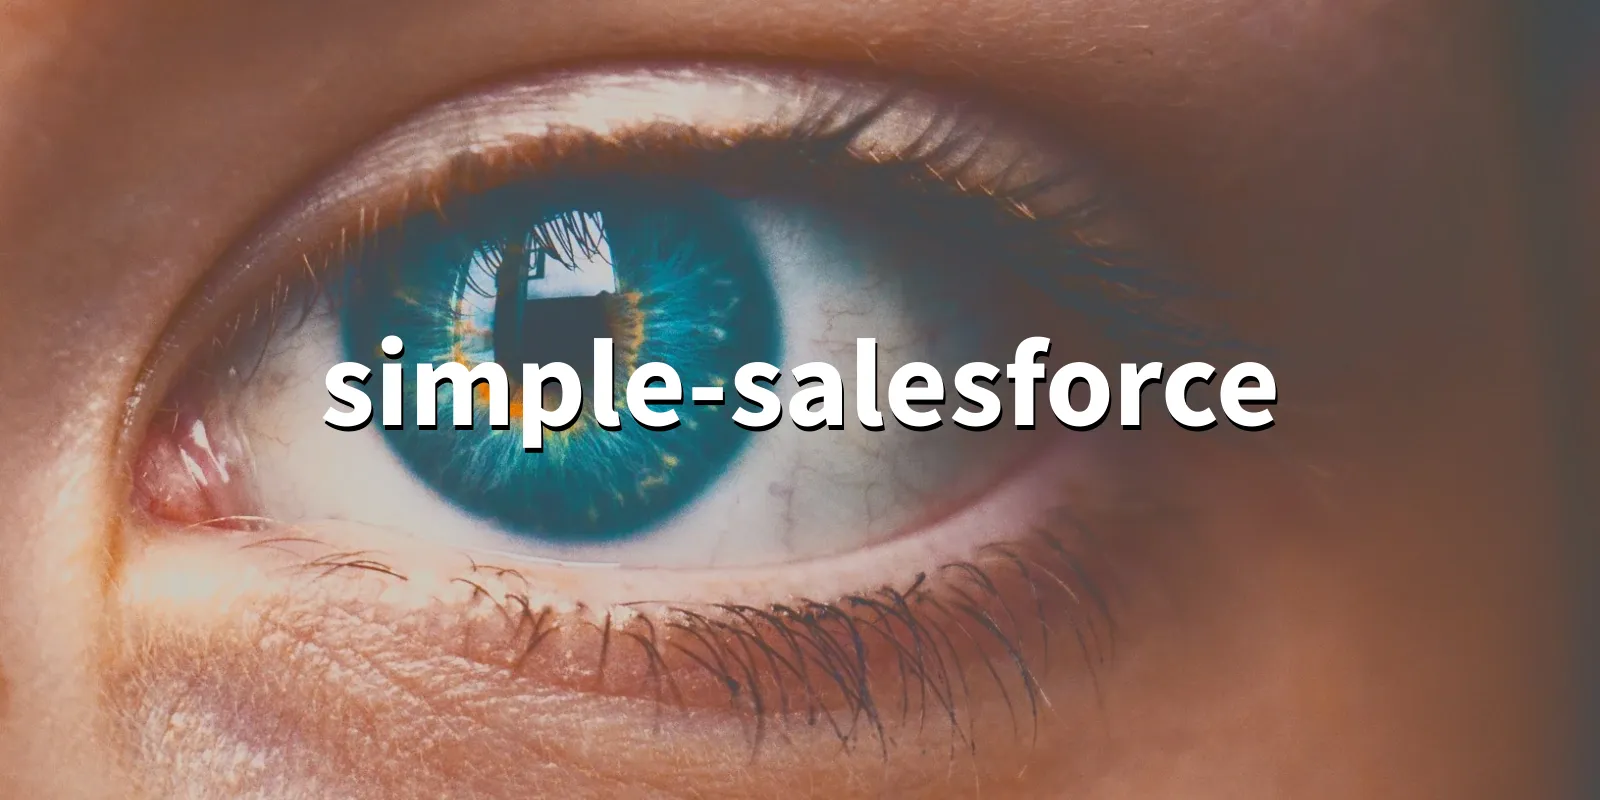 /pkg/s/simple-salesforce/simple-salesforce-banner.webp